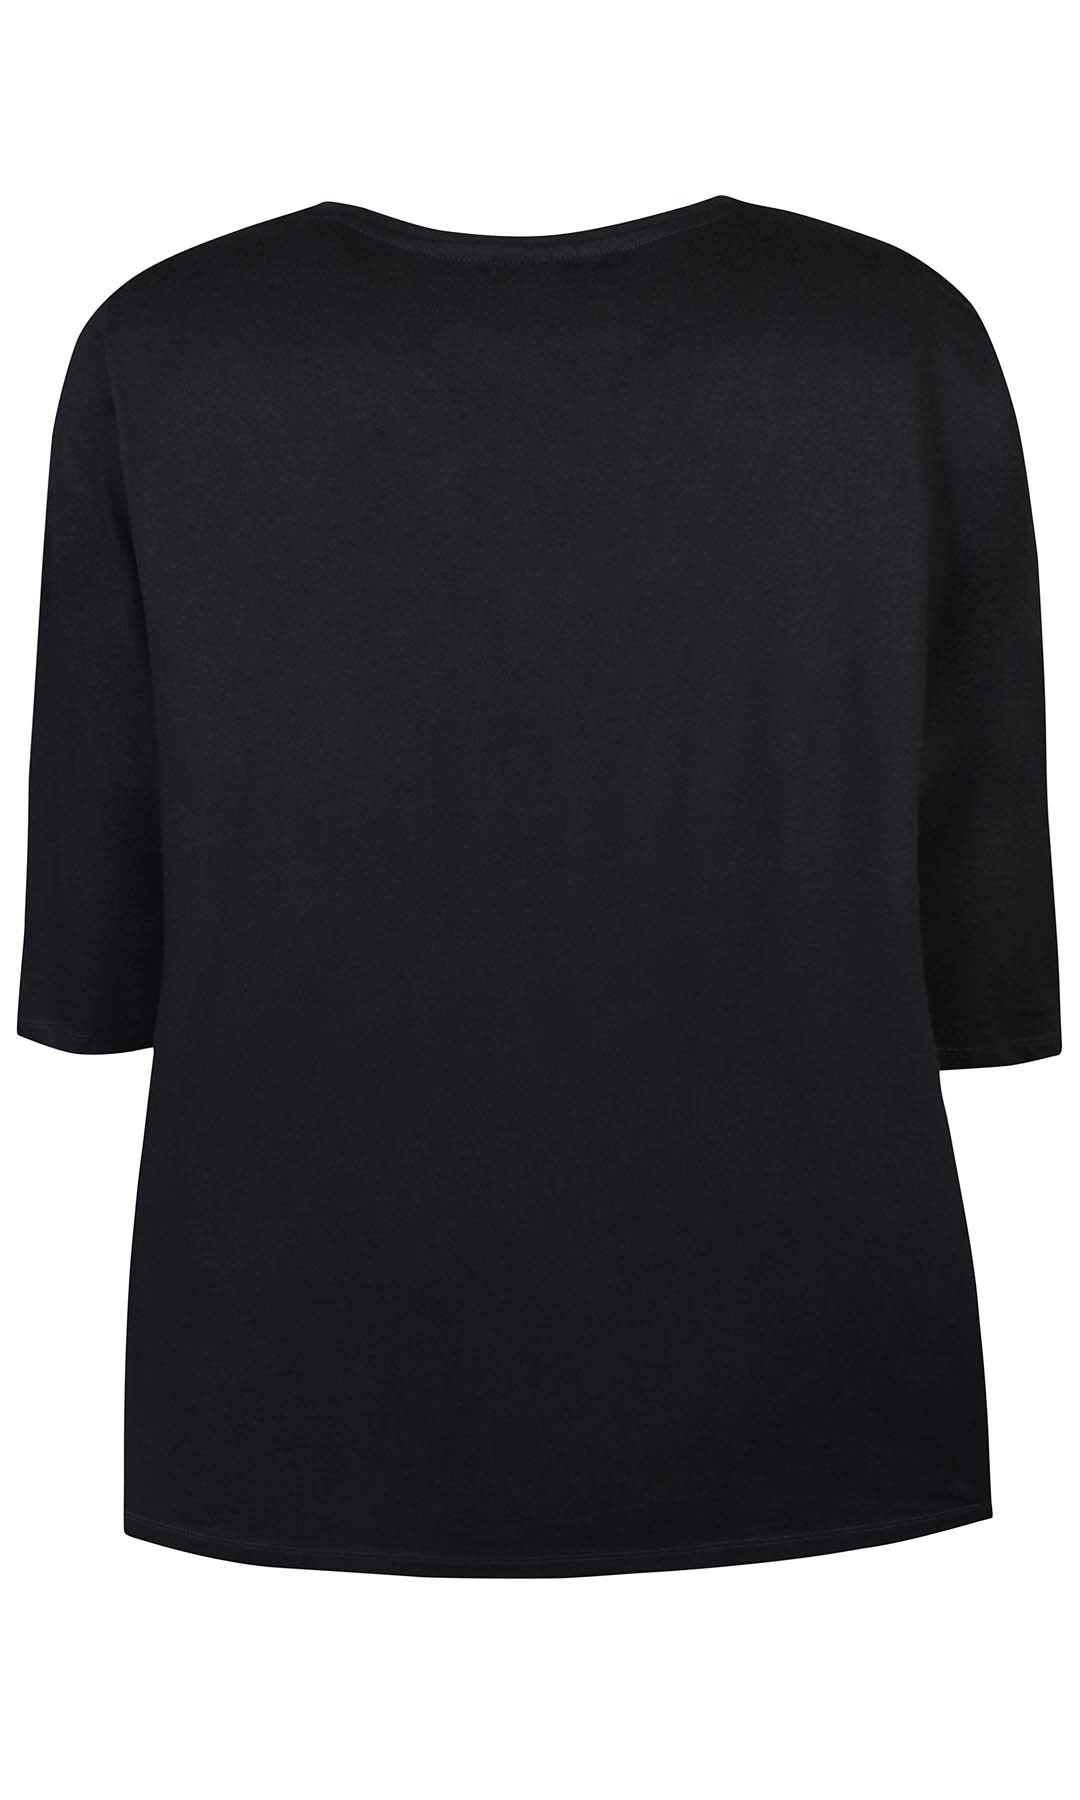 Chana 093 - T-shirt - Black